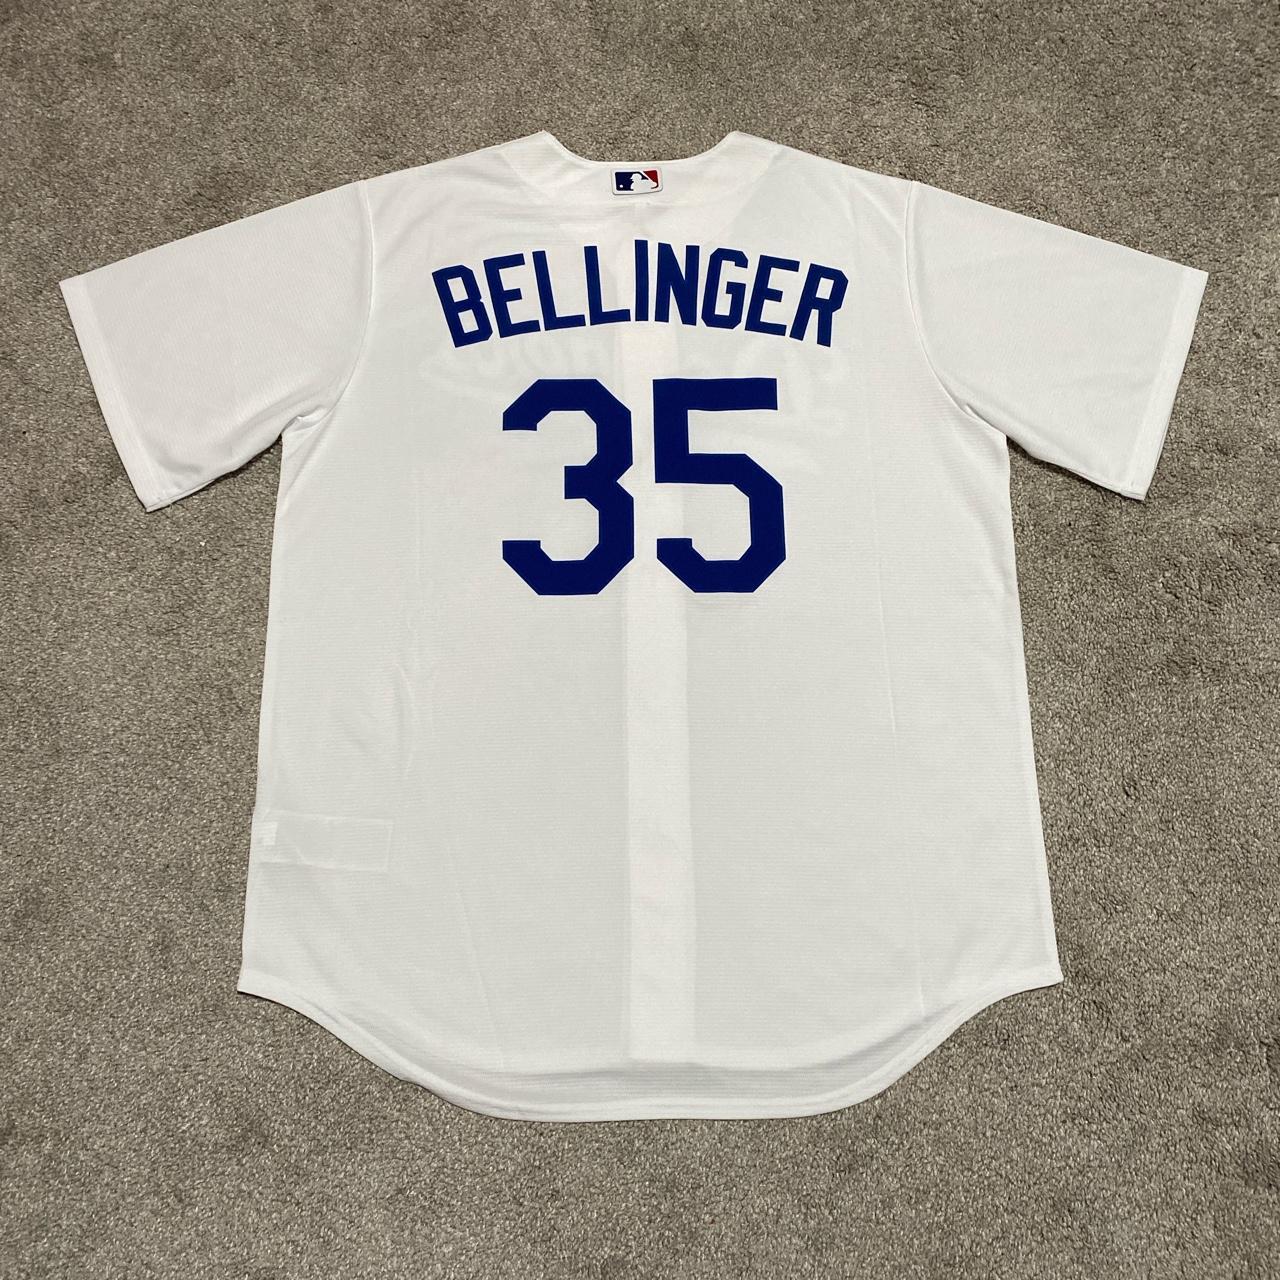 Los Angeles Dodgers Cody Bellinger Nike White Jersey